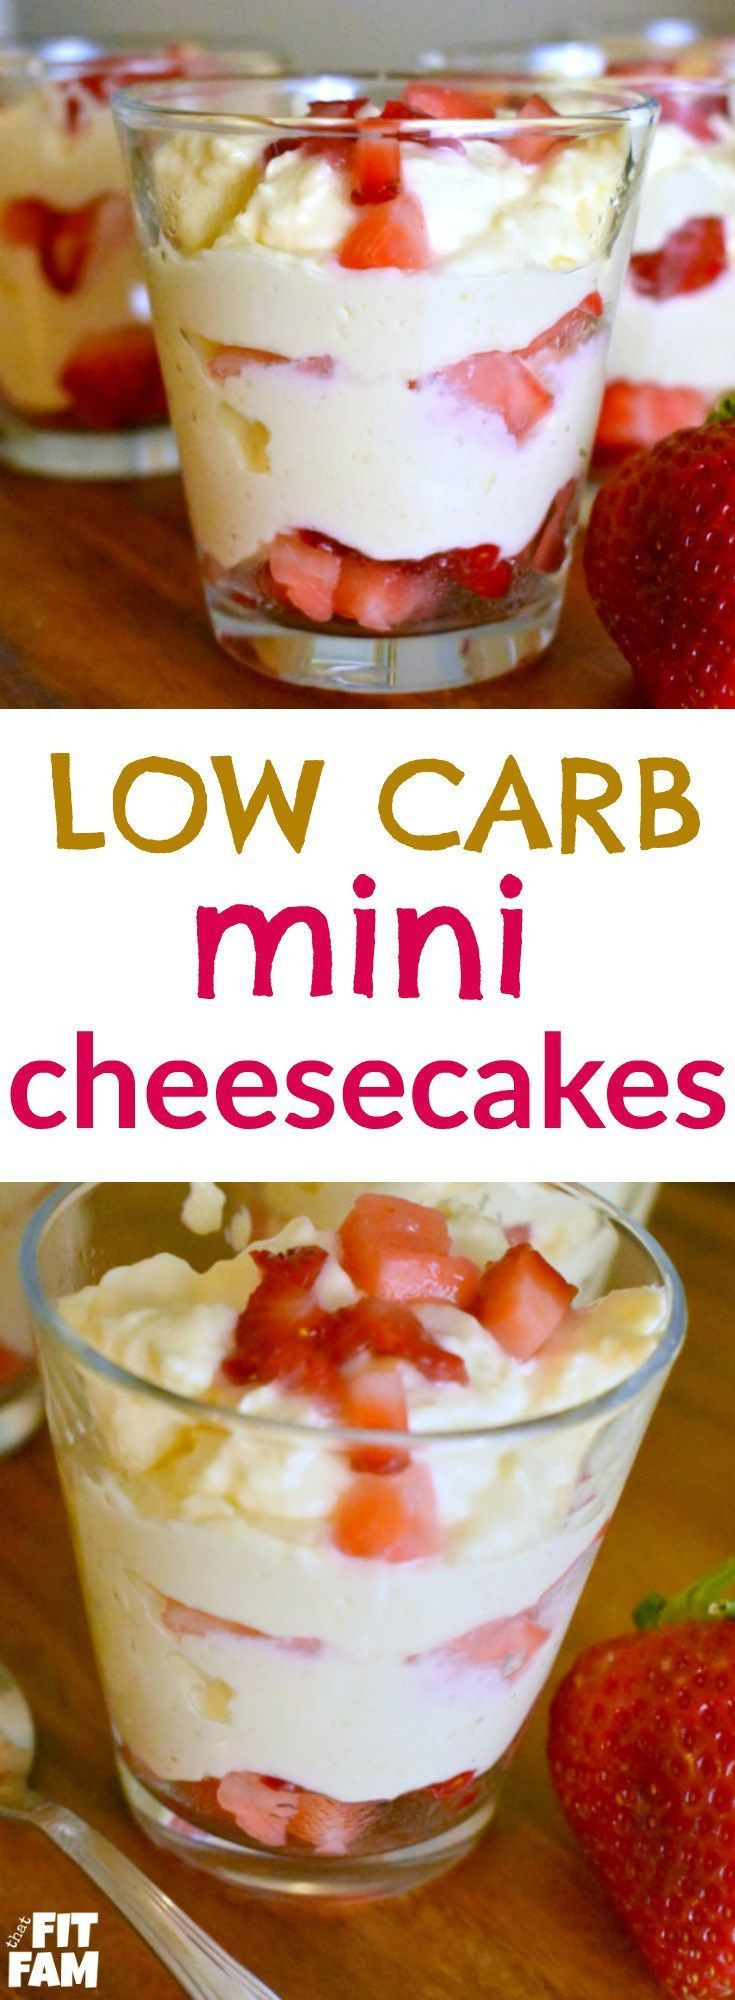 Low Carb Sugar Free Desserts
 Best 25 Low Carb Desserts ideas on Pinterest